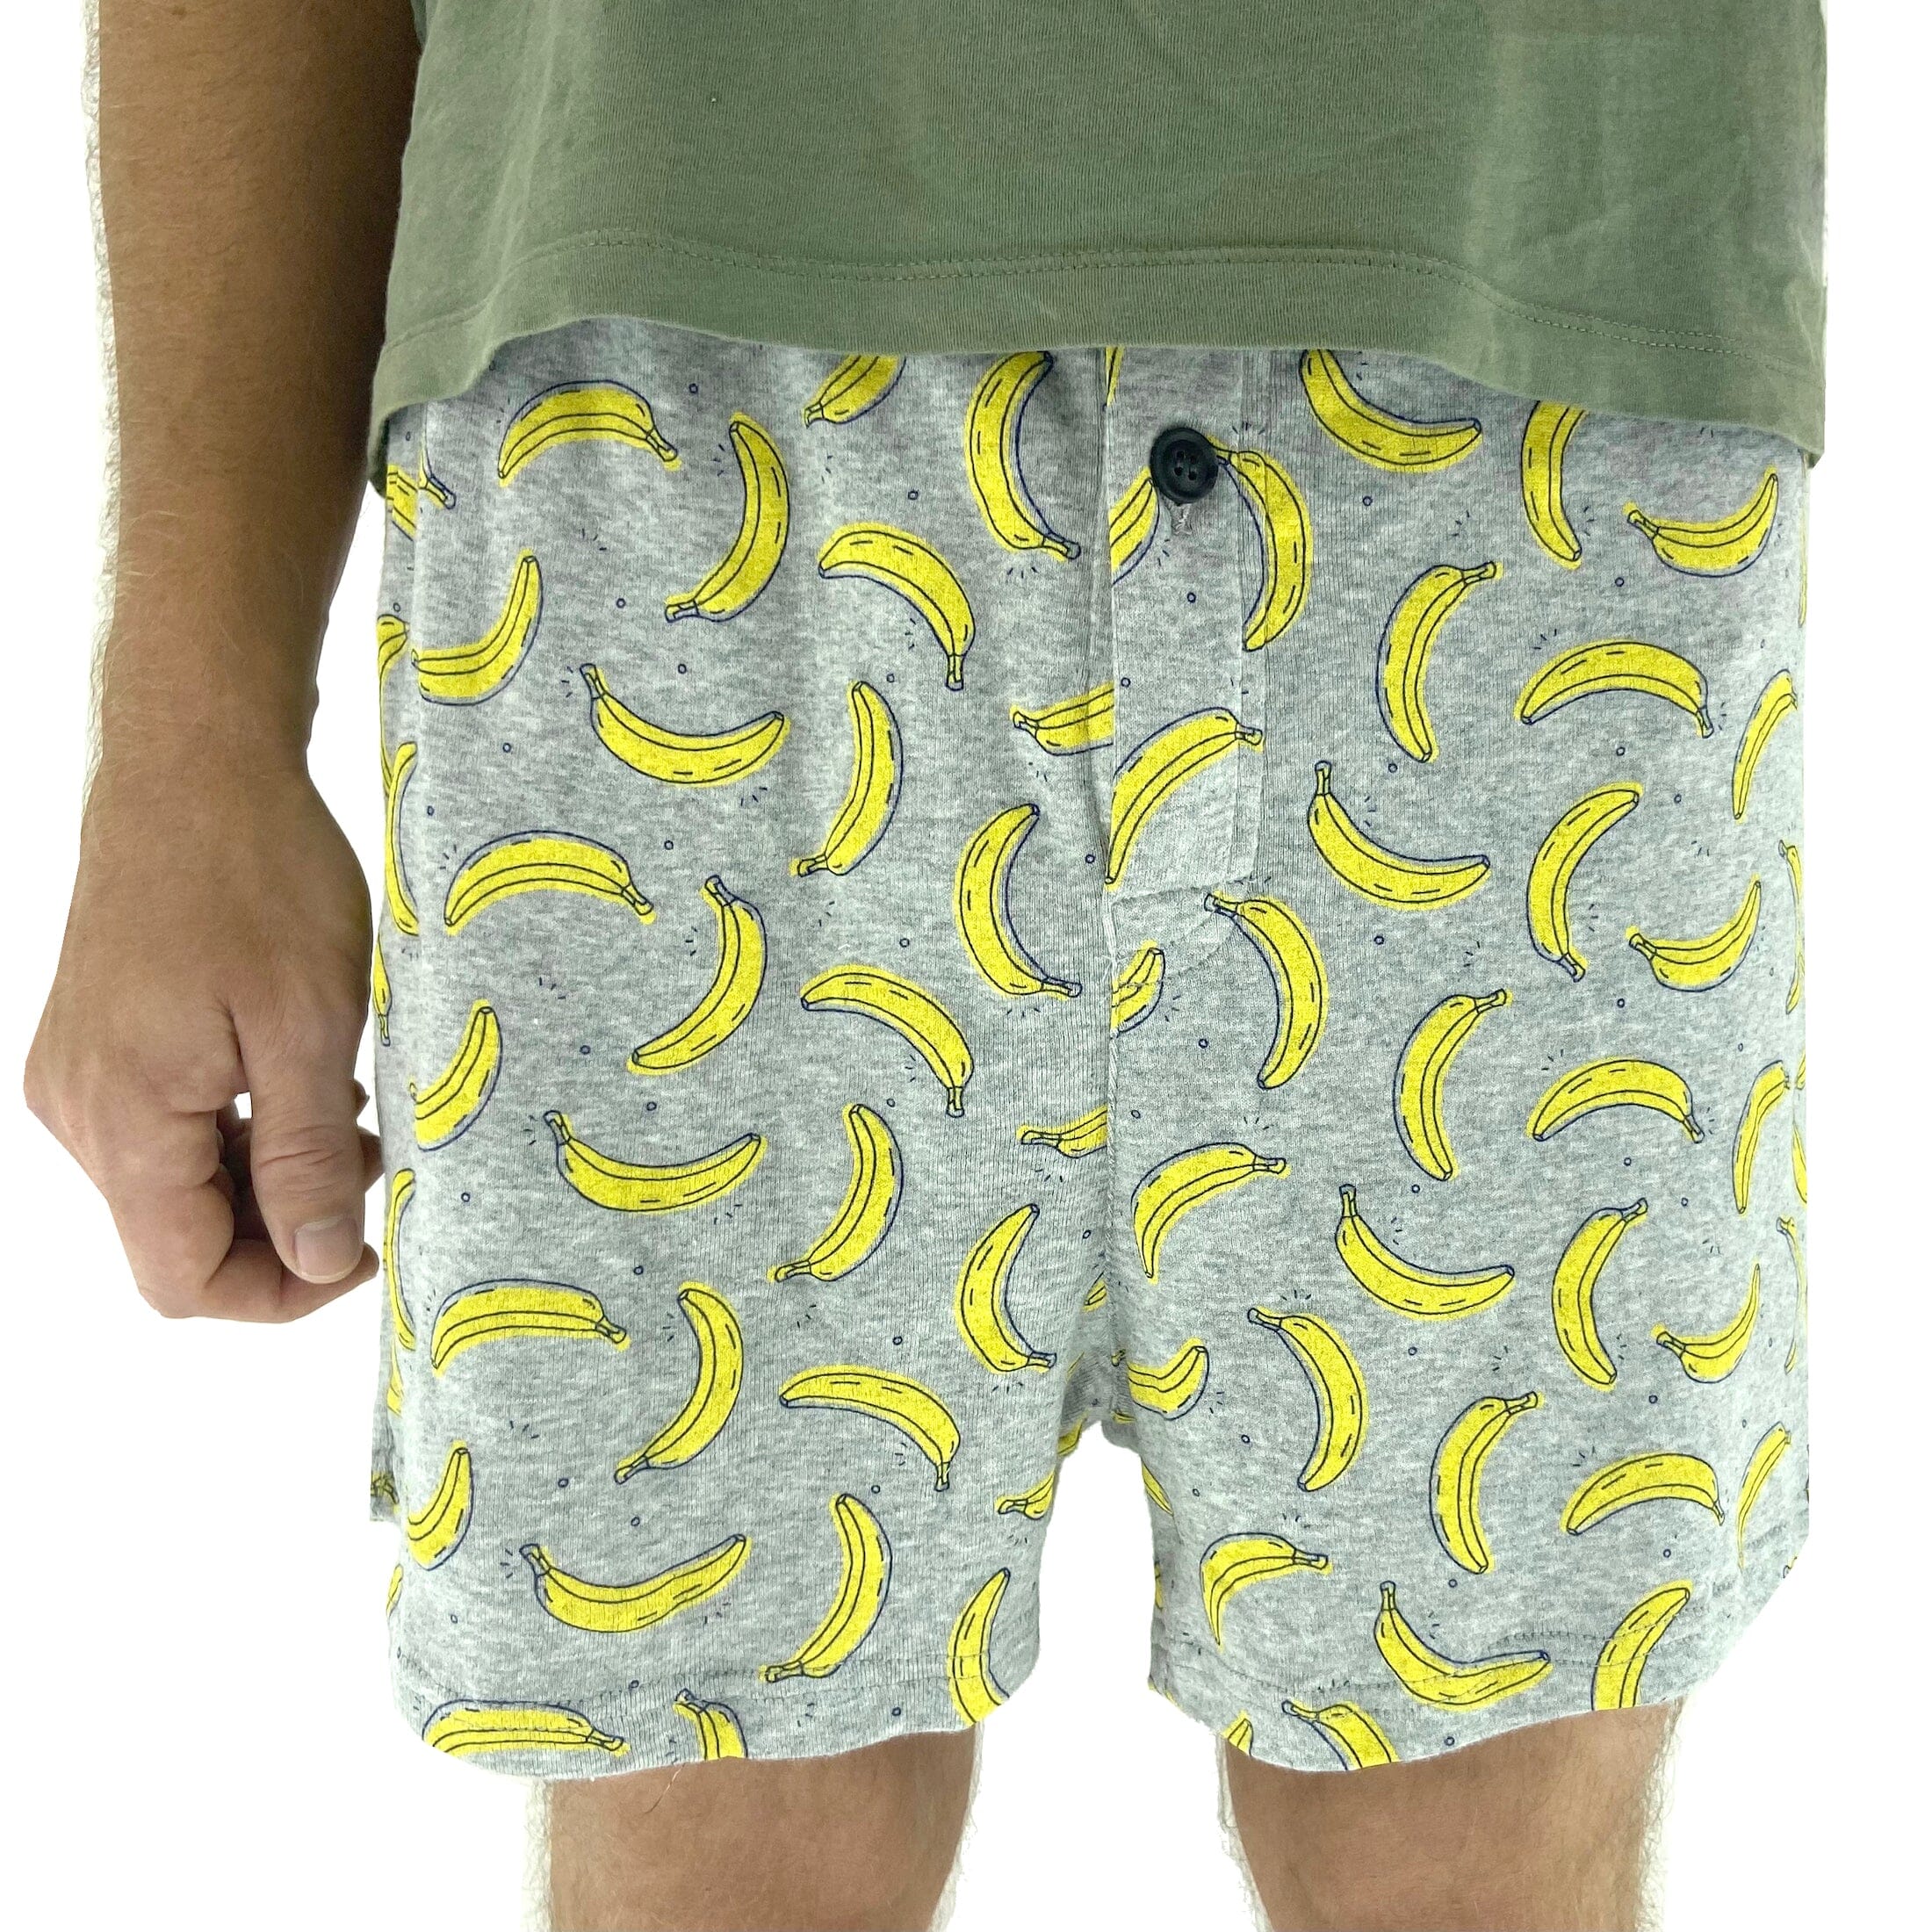 Men's Classic Banana Patterned Cotton Pajama Short Bottoms on Grey